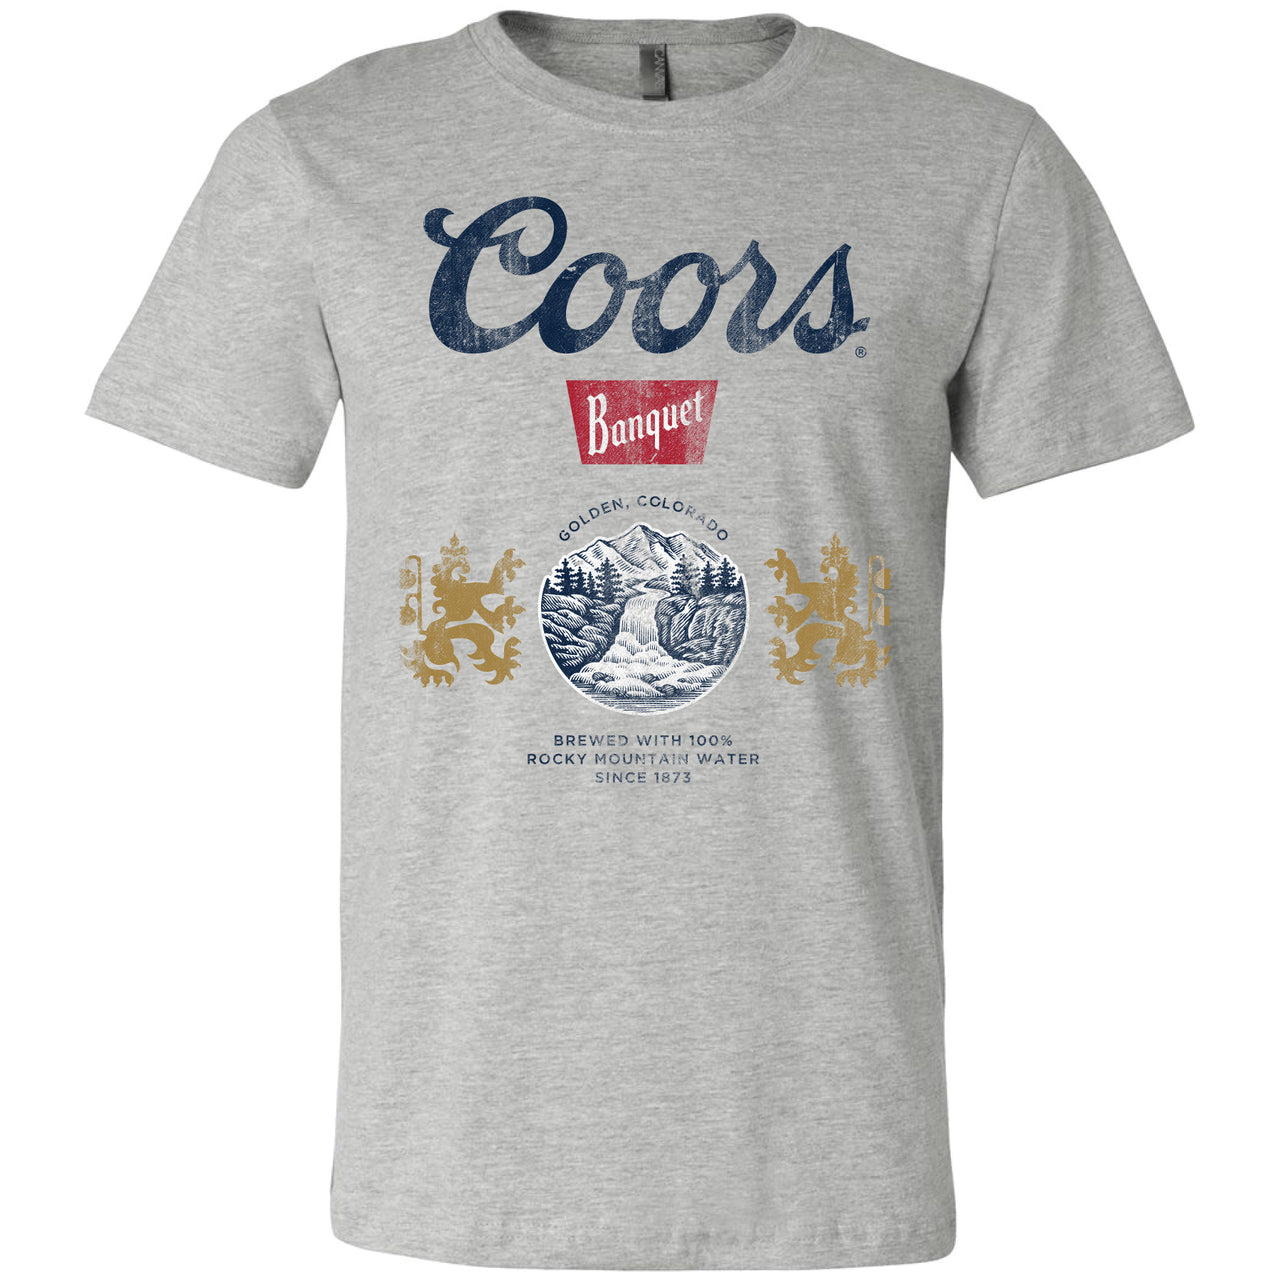 Coors Banquet Label T-Shirt